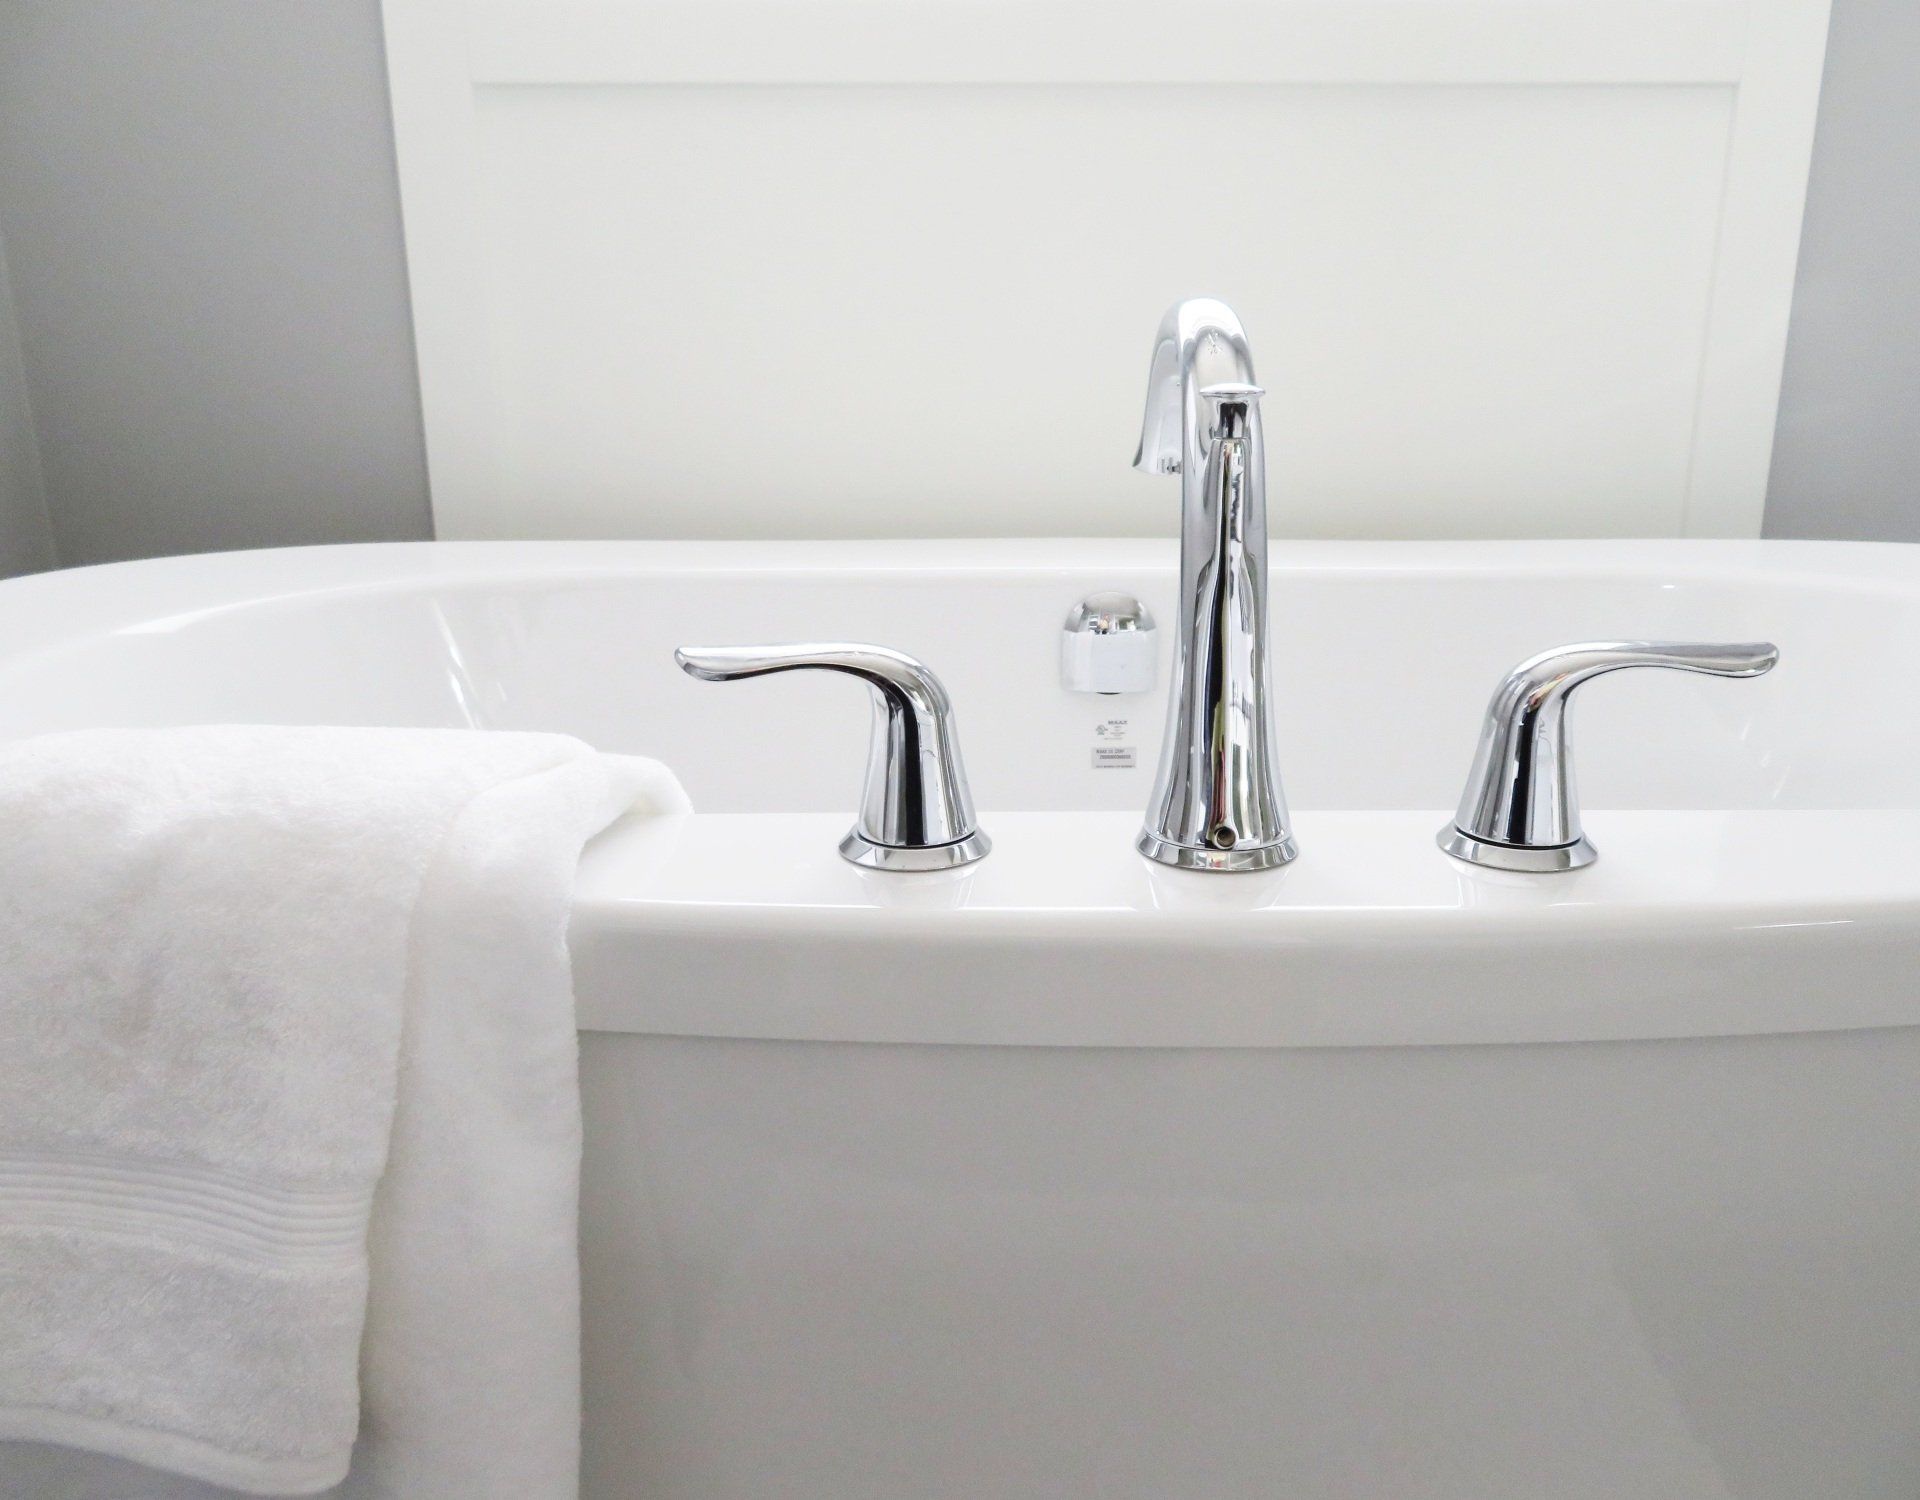 a bathtub with chrome handles and a towel on the side